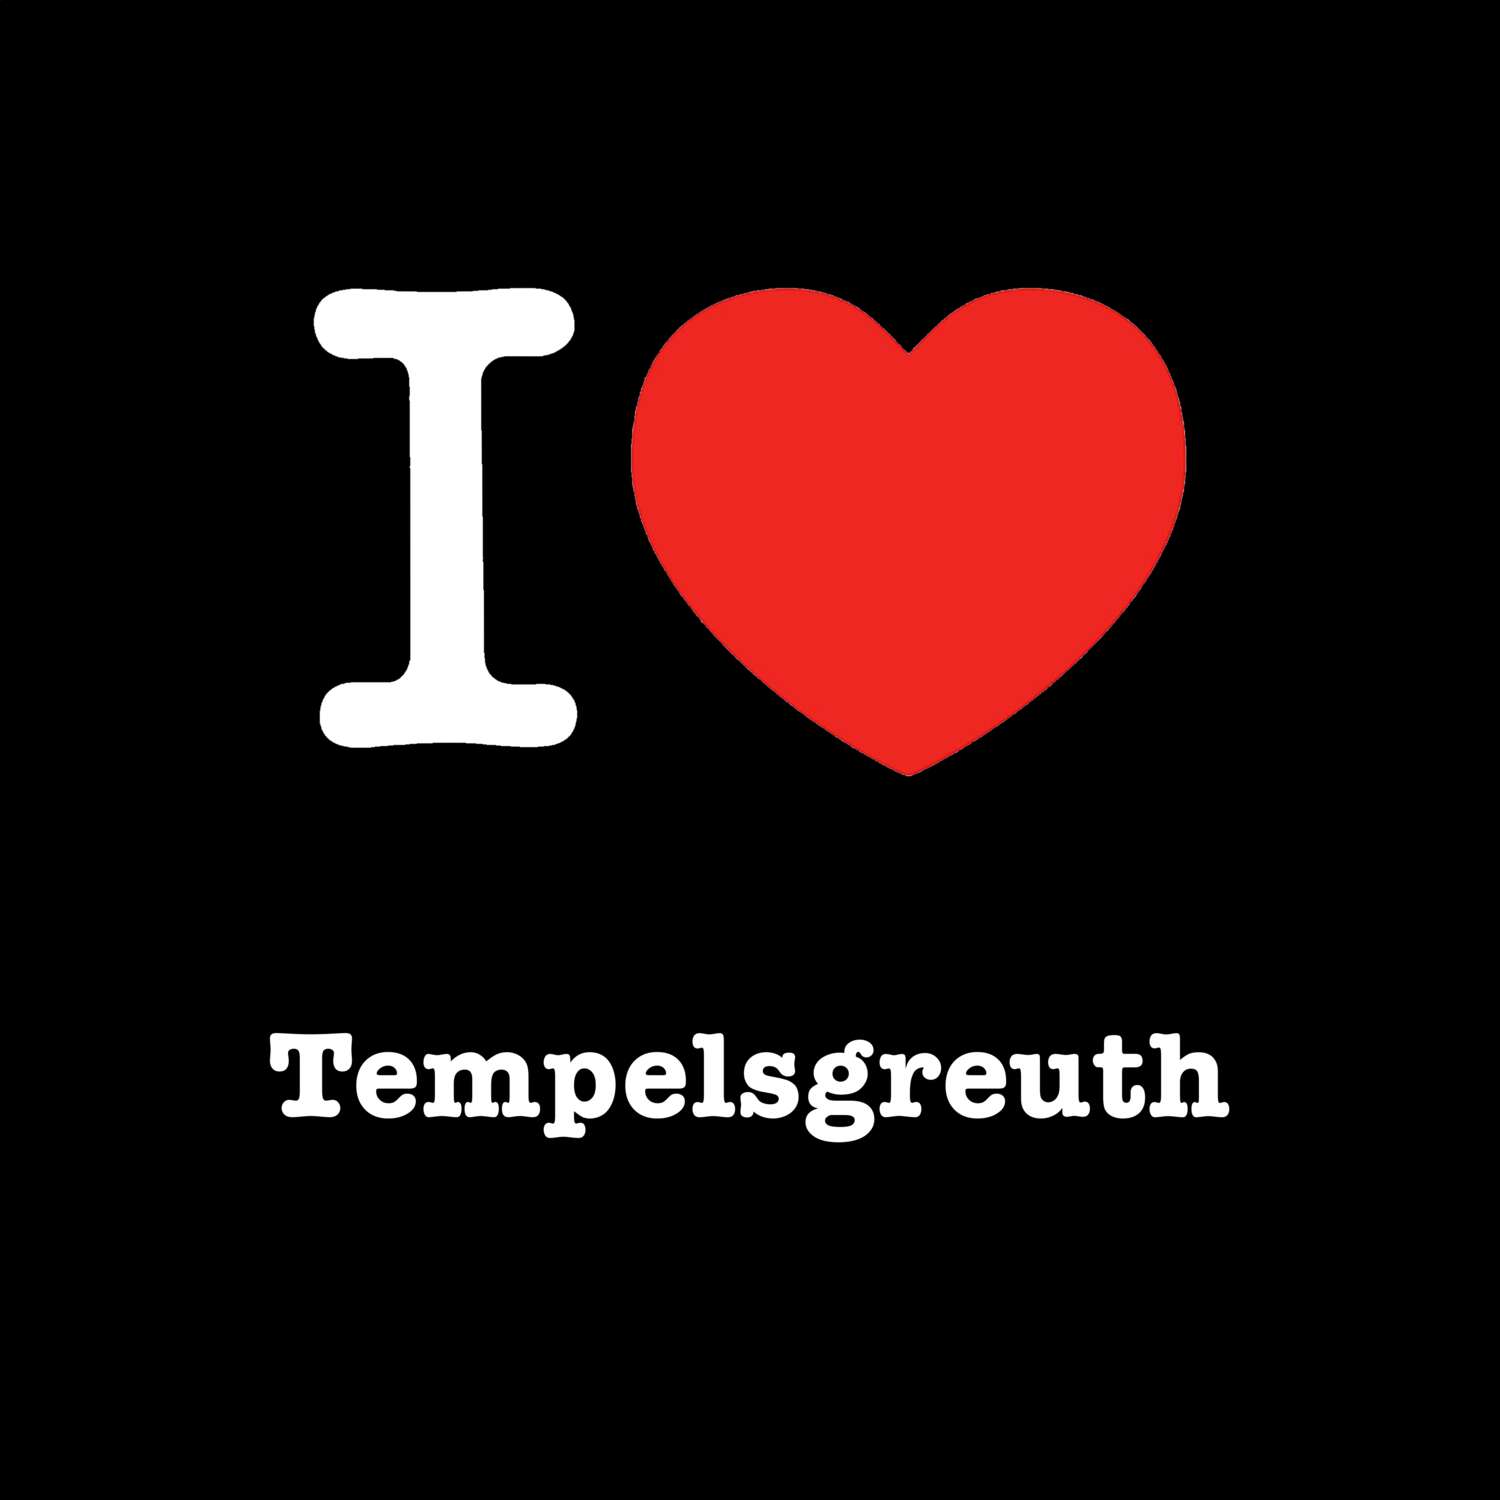 Tempelsgreuth T-Shirt »I love«